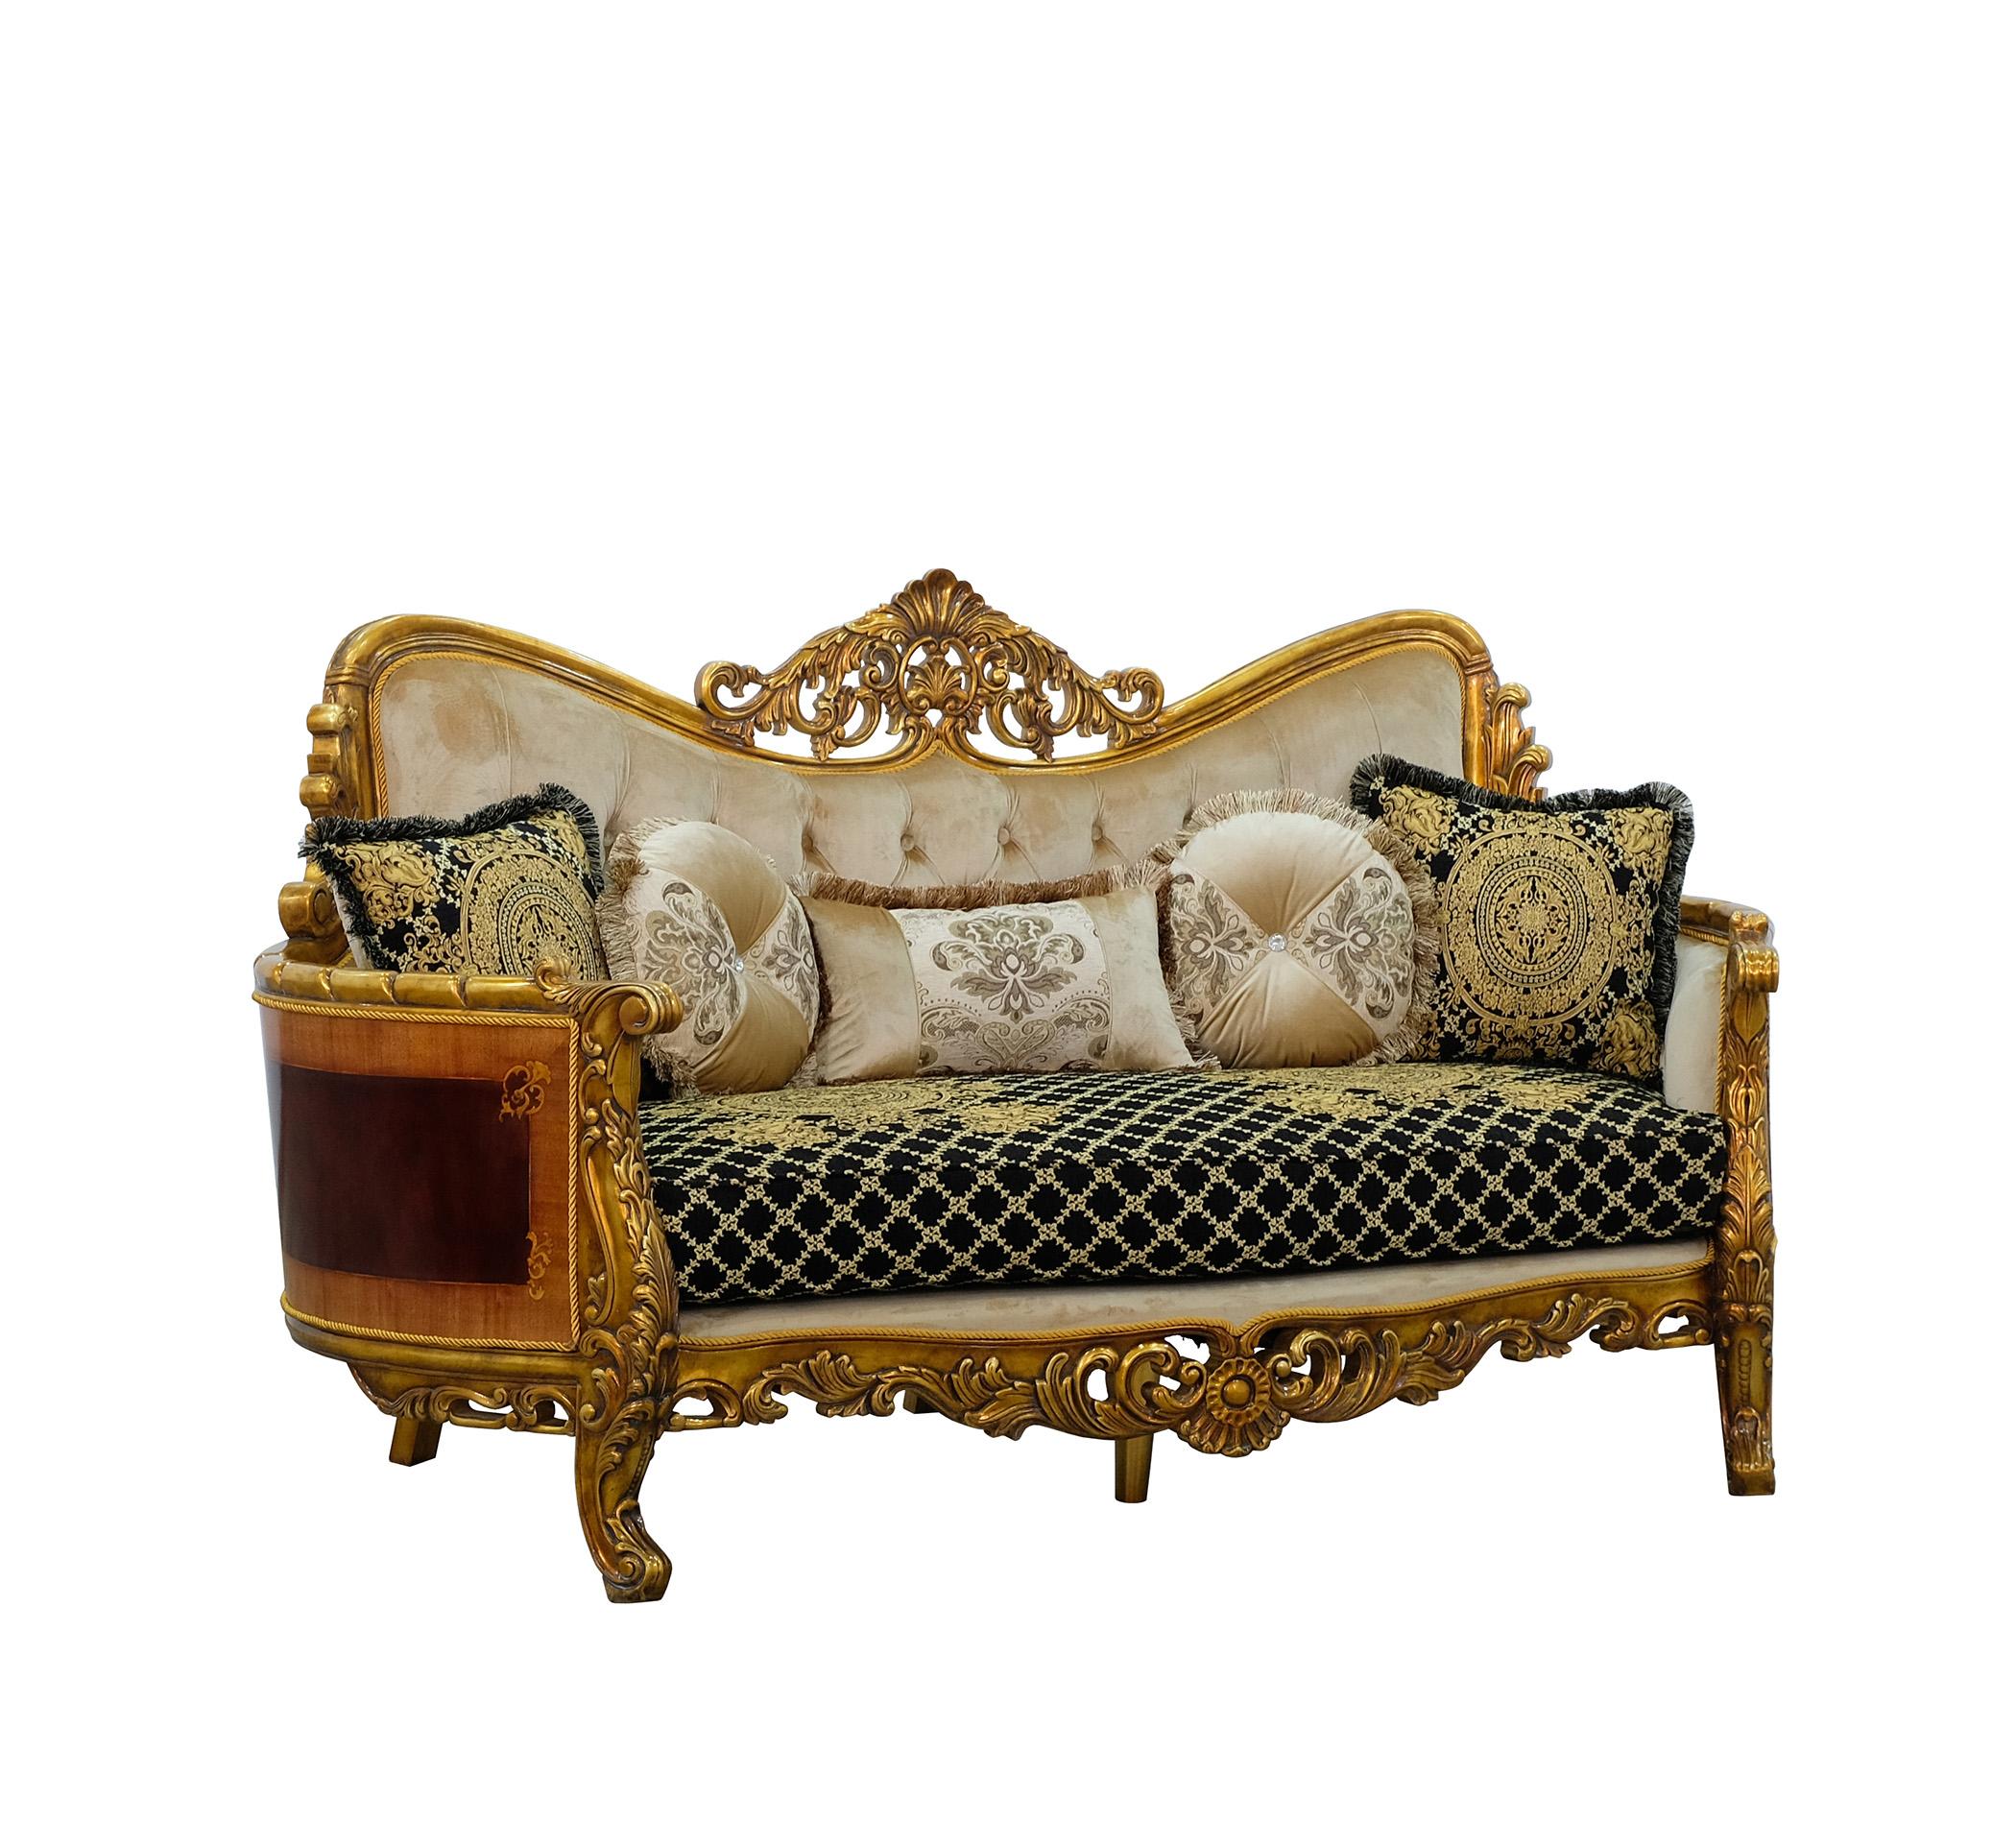 Classic, Traditional Loveseat MAGGIOLINI 31059-L in Antique, Gold, Black, Beige Fabric